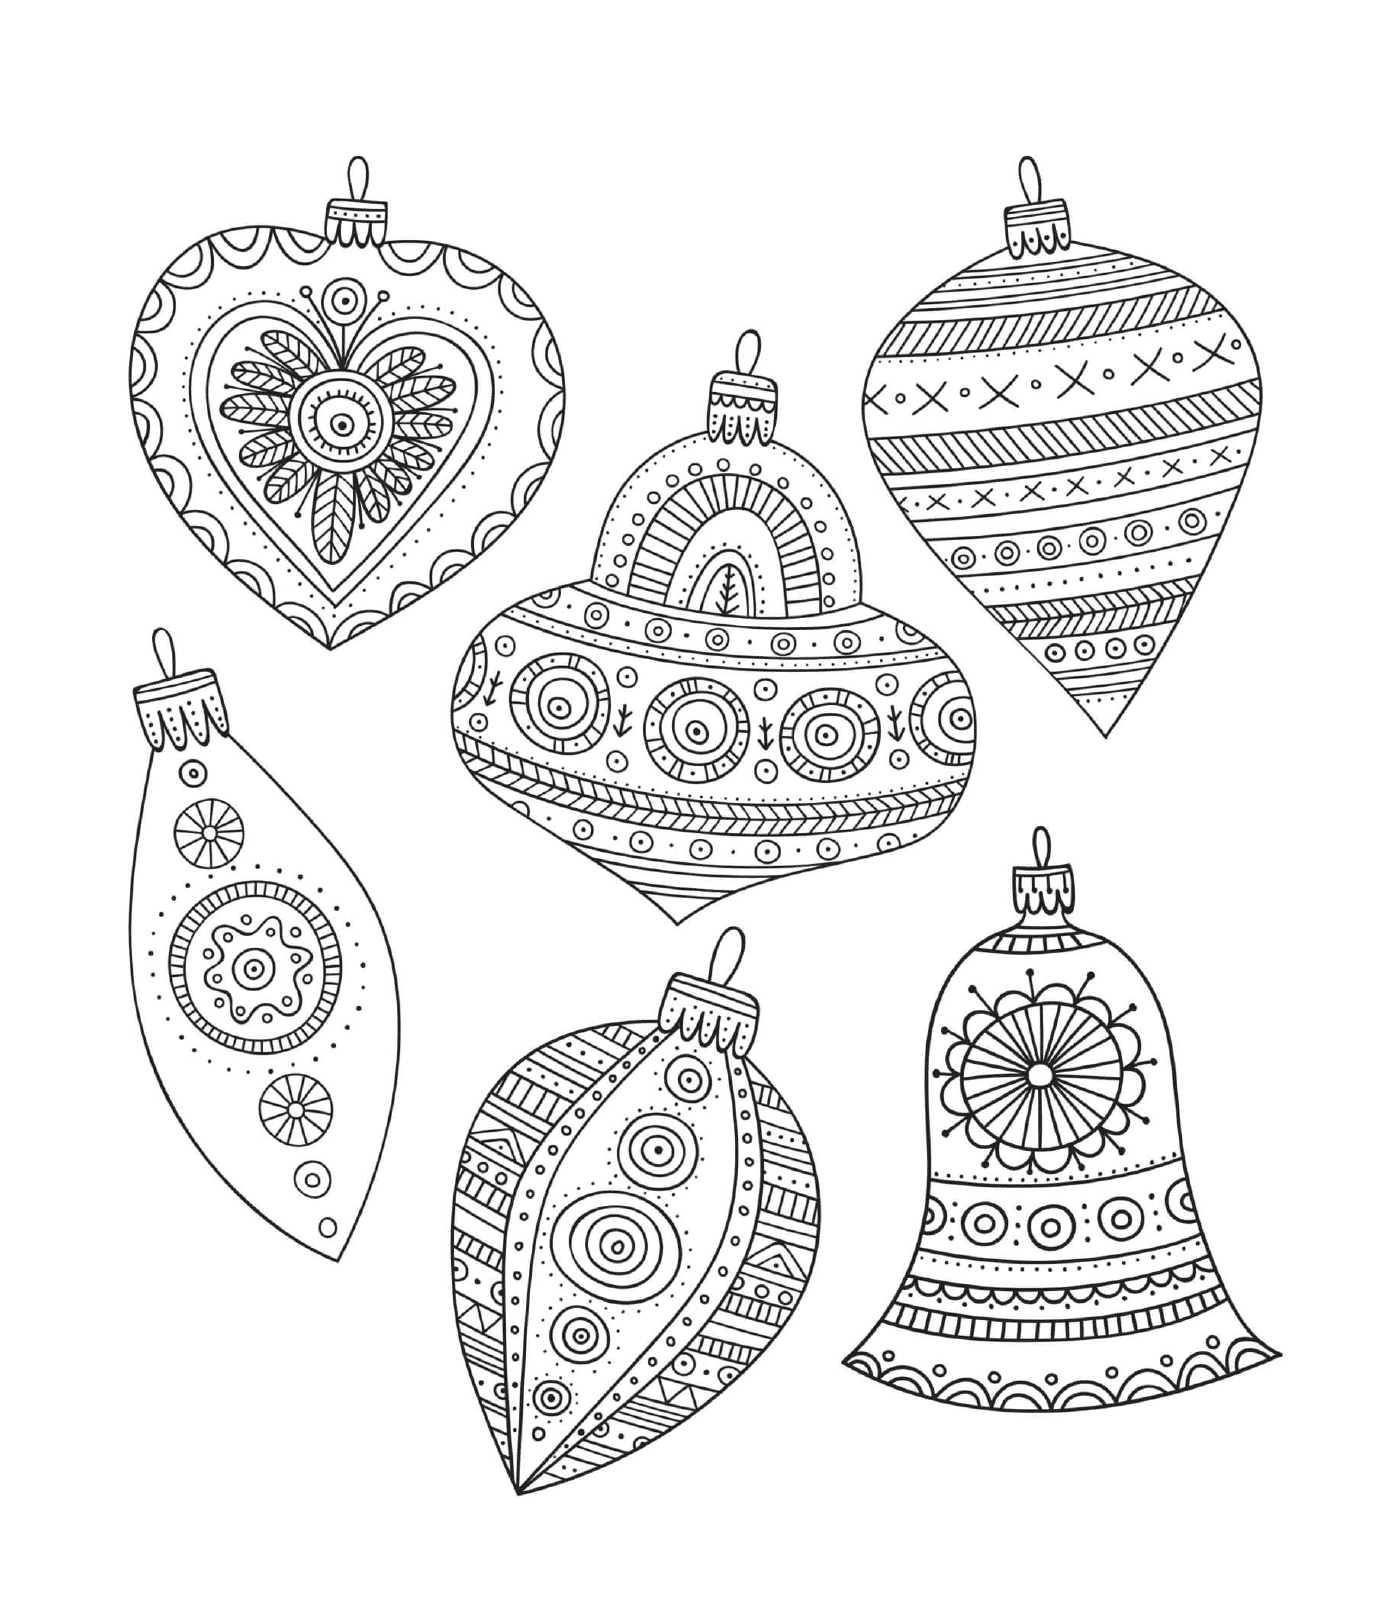  A set of Christmas ornaments 